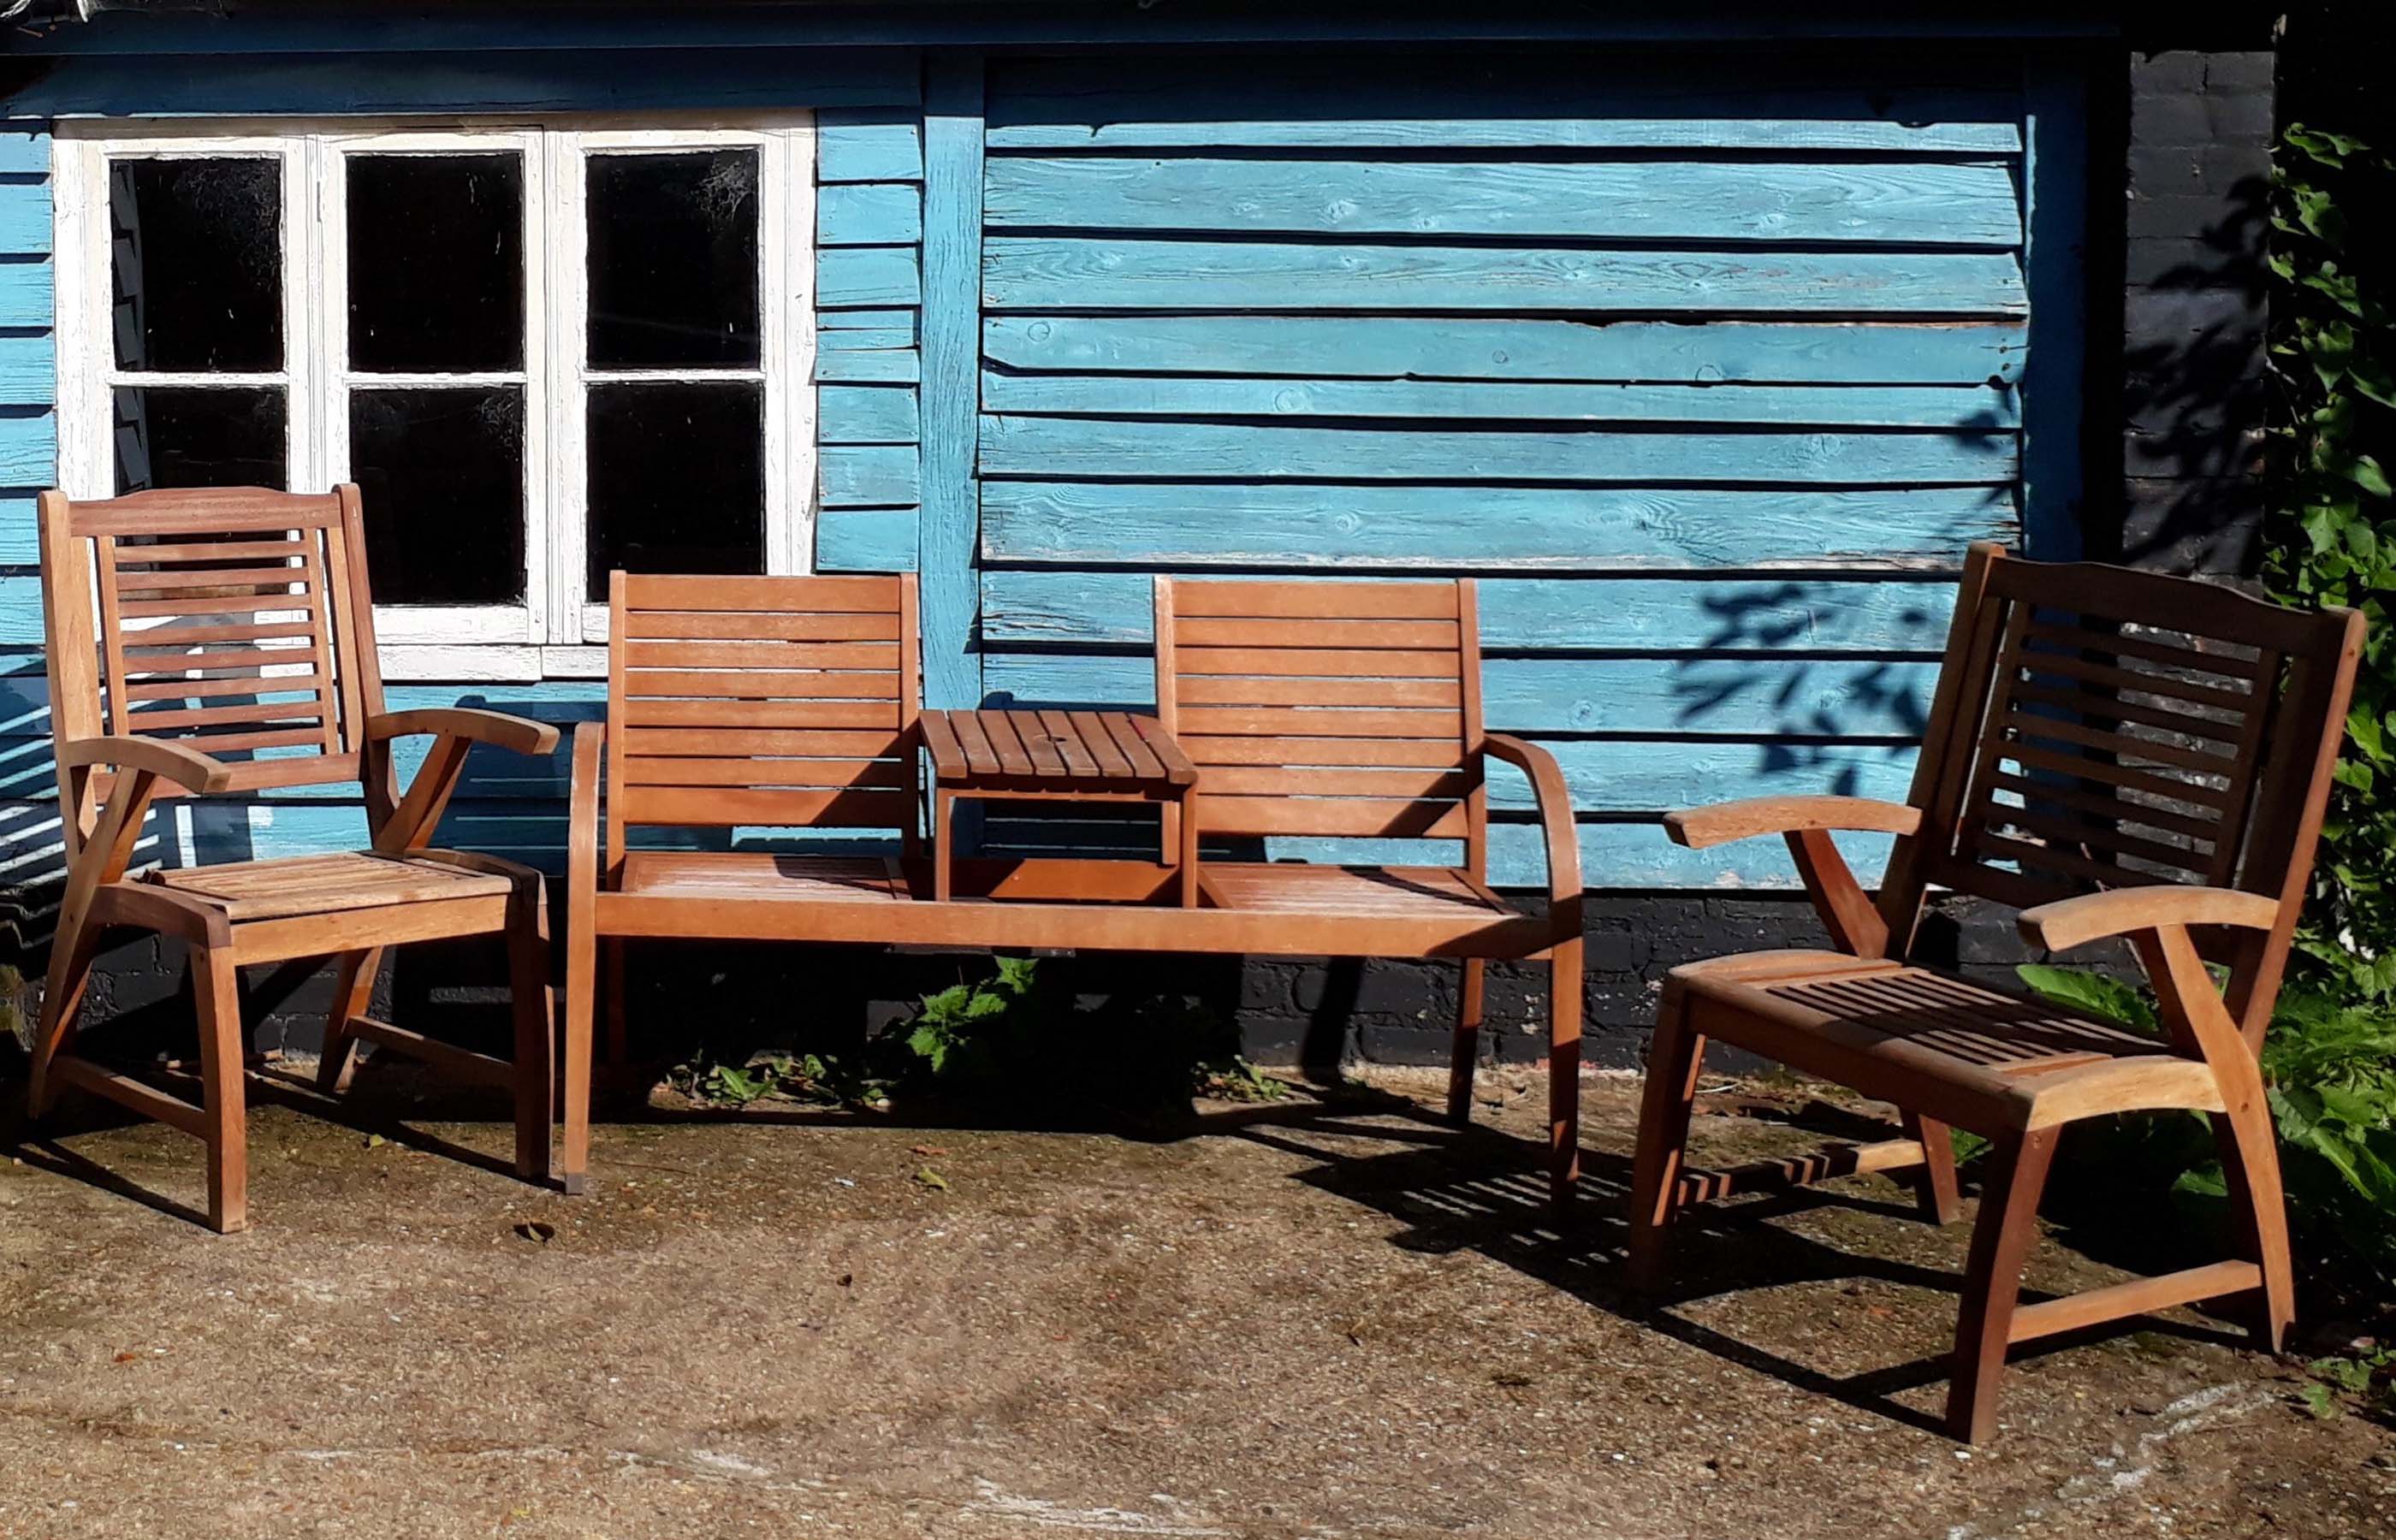 Wooden Garden Furniture, Best Wood For Outdoor Use Uk